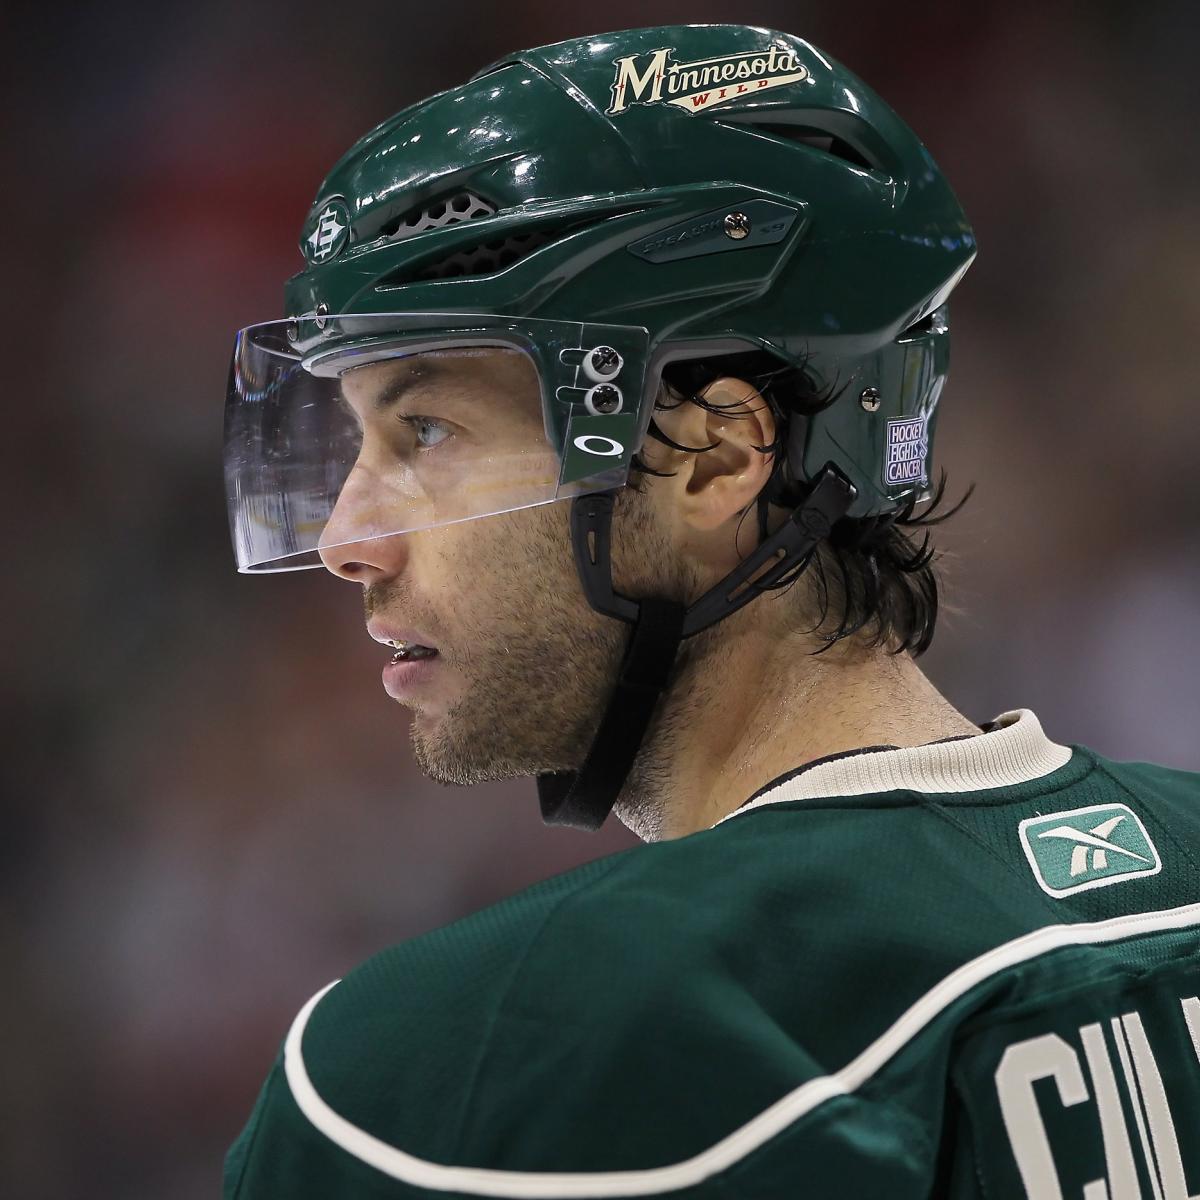 UPDATE: Matt Cullen returning to Minnesota for 20th NHL season